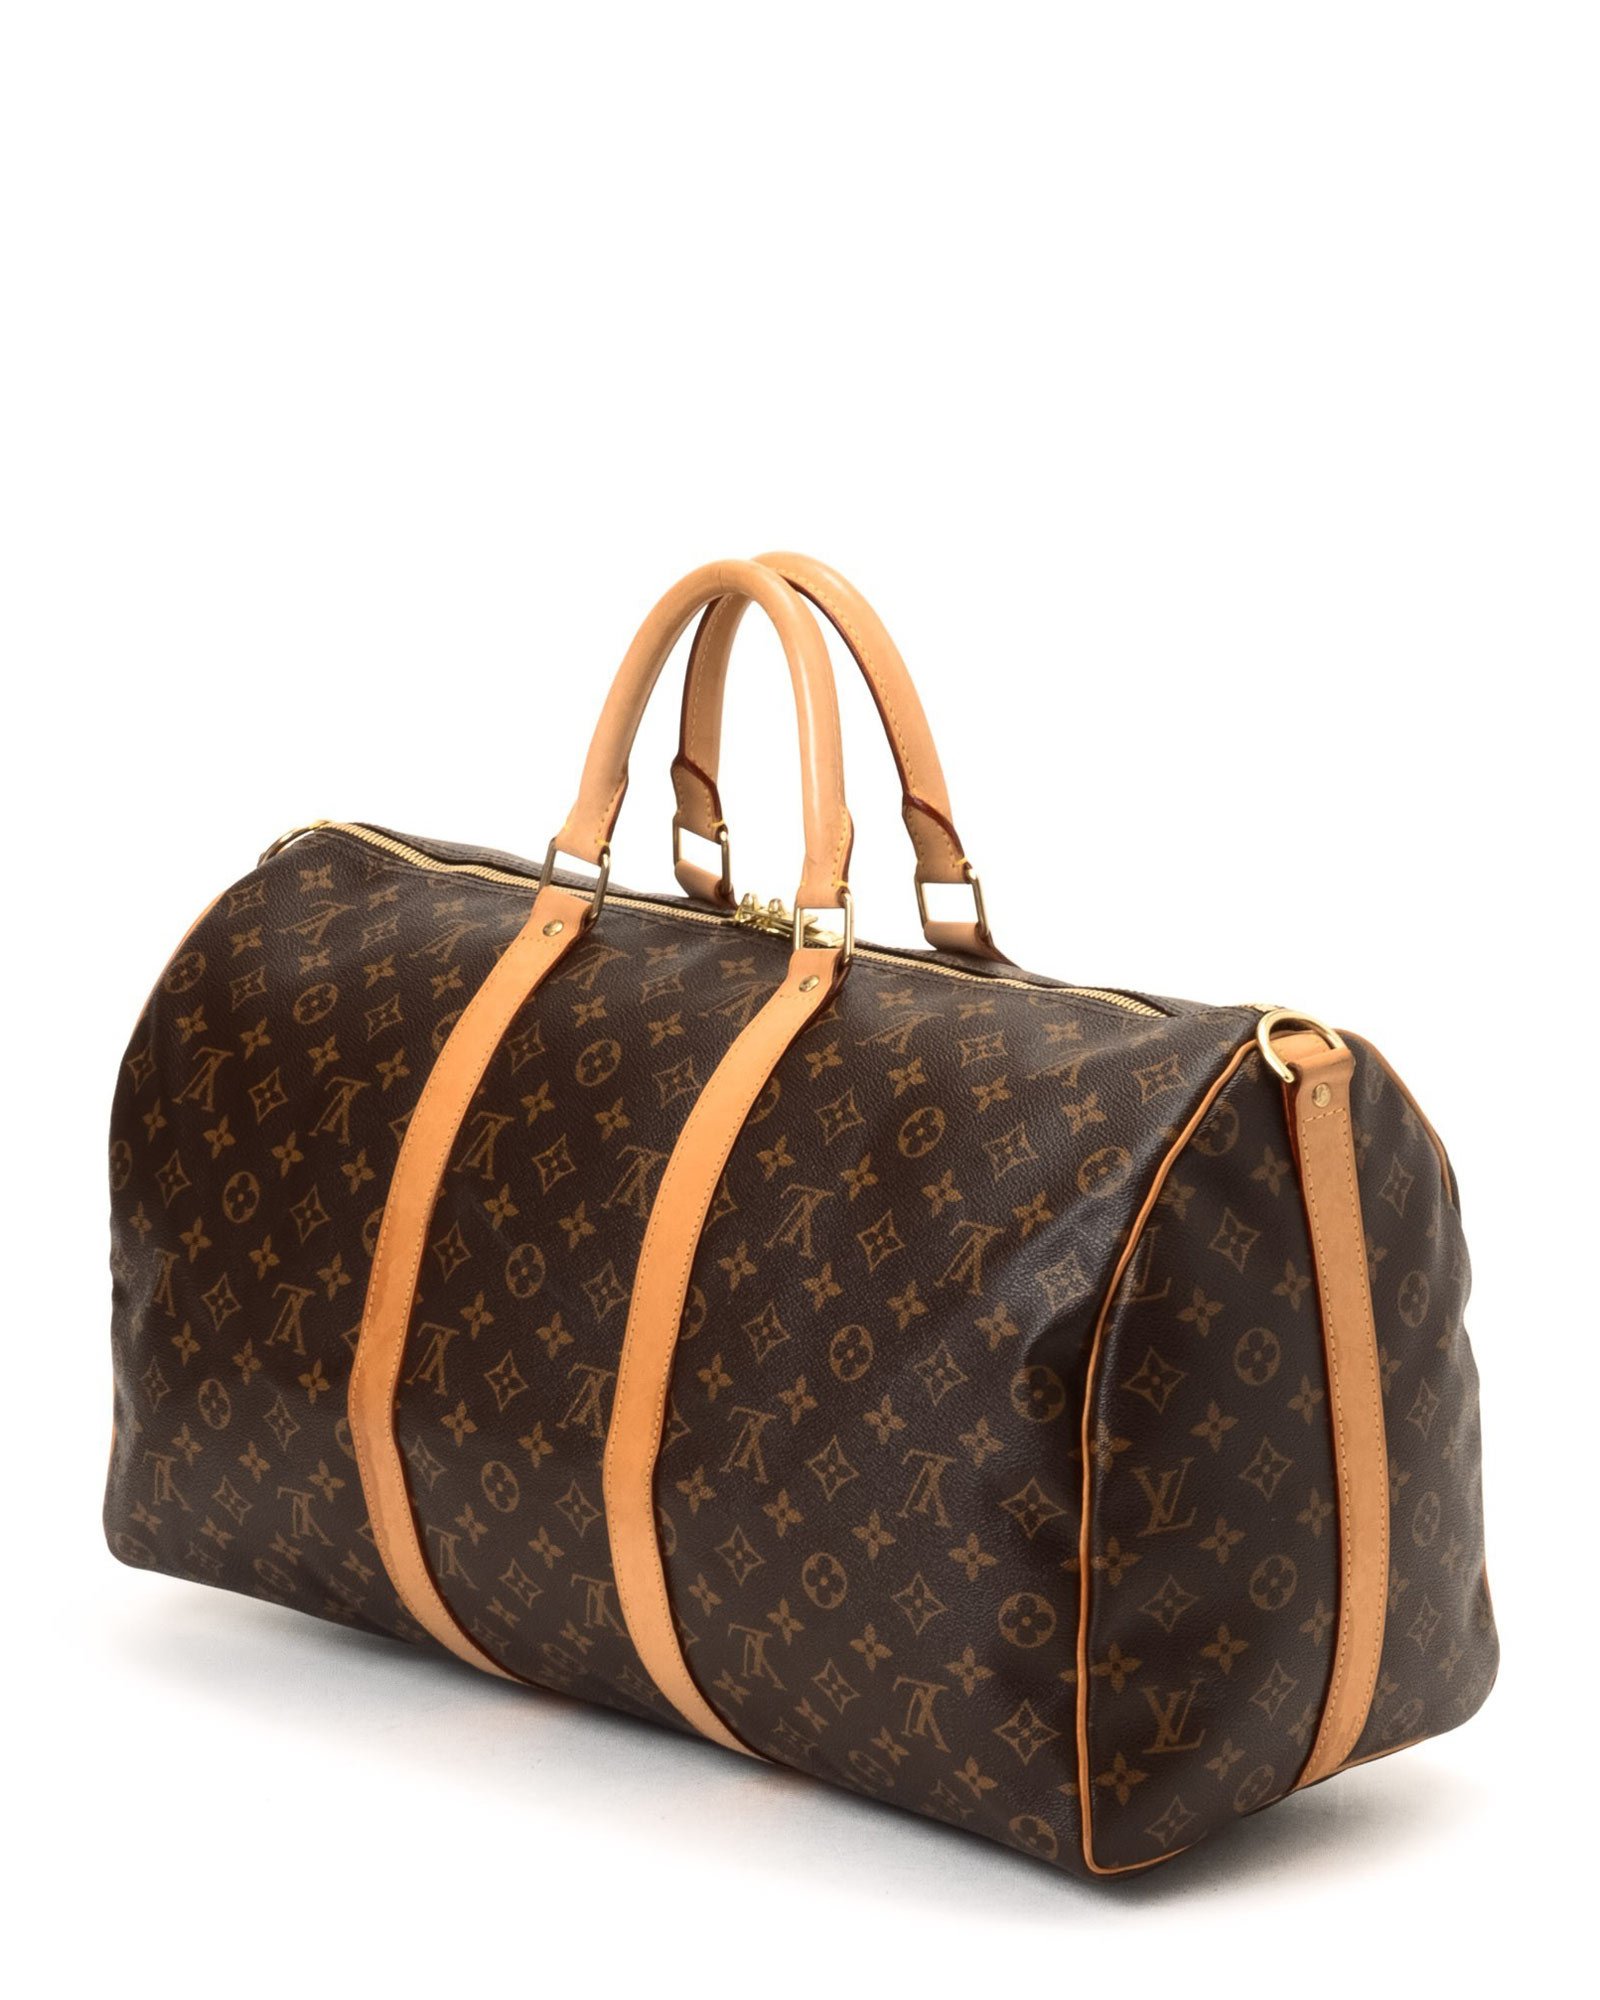 Lyst - Louis Vuitton Travel Bag - Vintage in Brown for Men